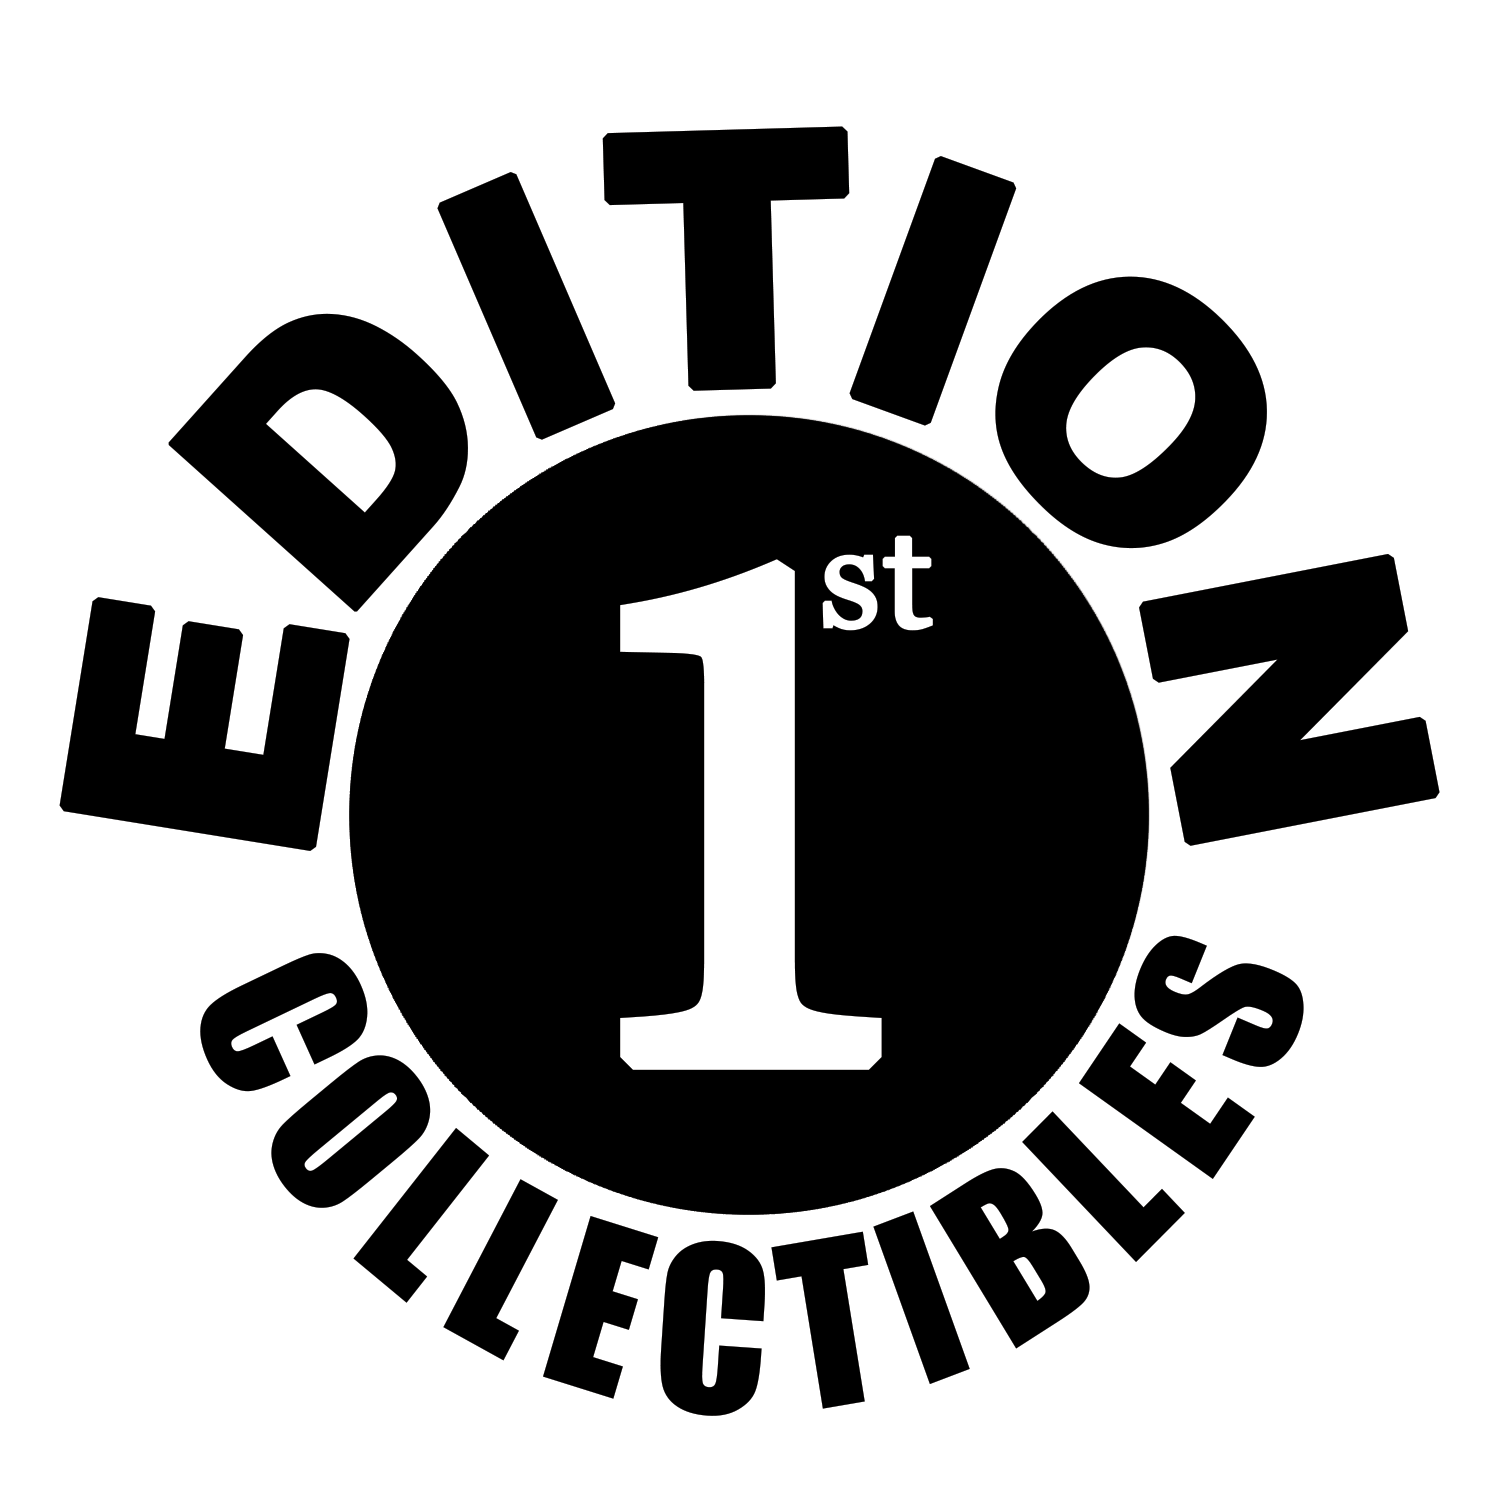 first edition logo  Edition, ? logo, One